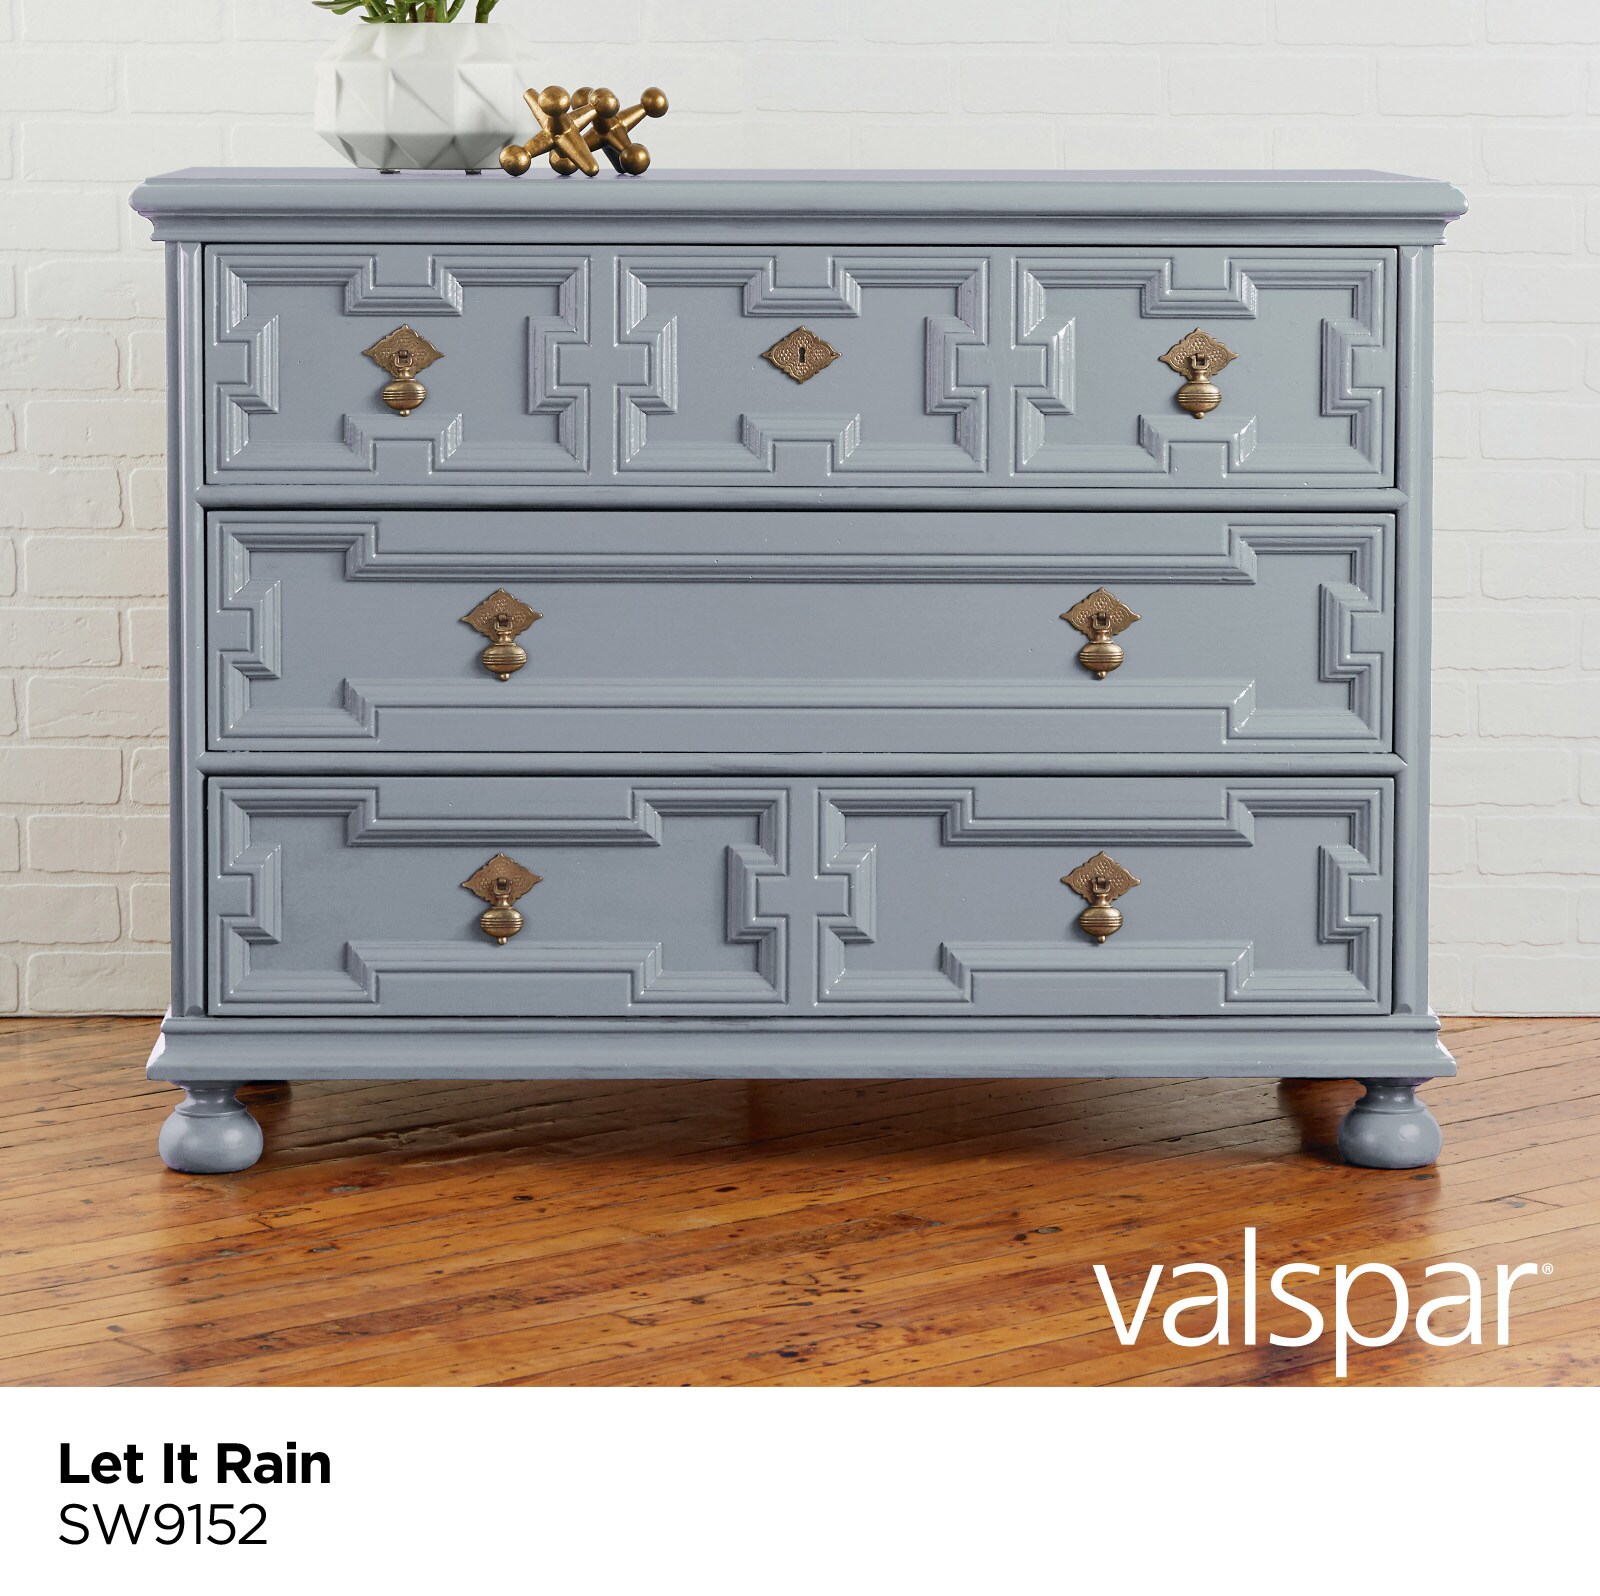 Valspar Semi-gloss Tricorn Black Hgsw1441 Cabinet and Furniture Paint  Enamel (1-Gallon) at